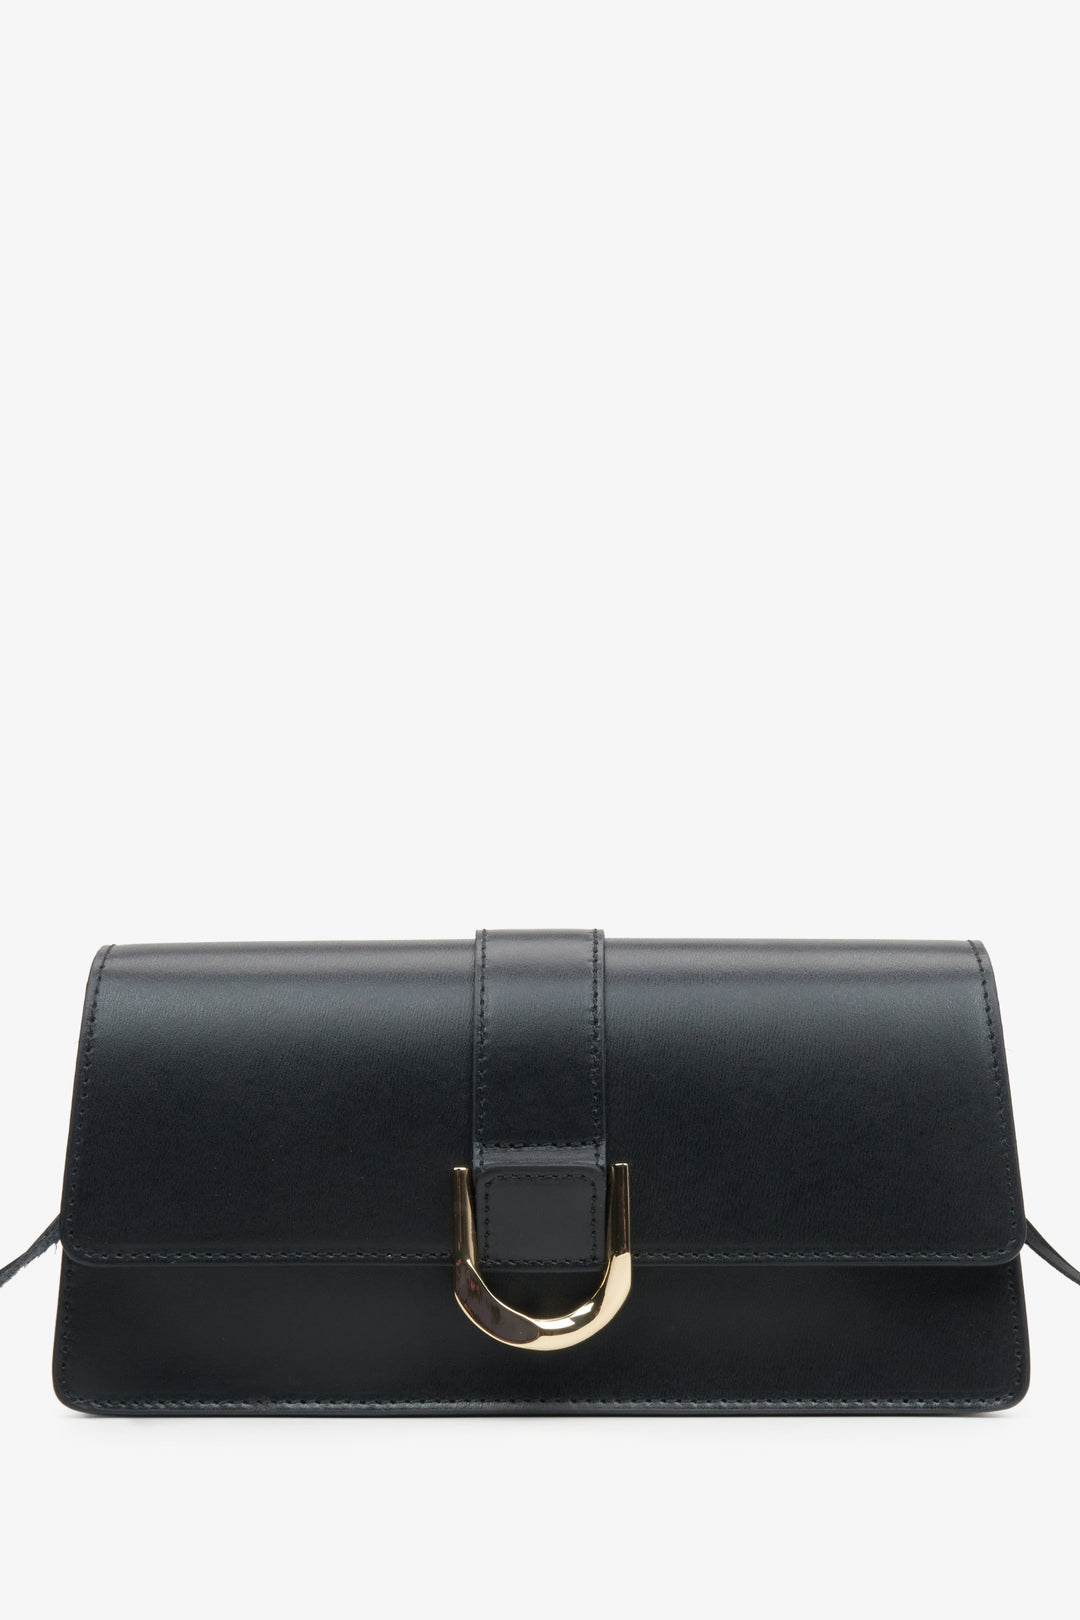 Women's Black Leather Handbag with Golden Accents Estro ER00114772